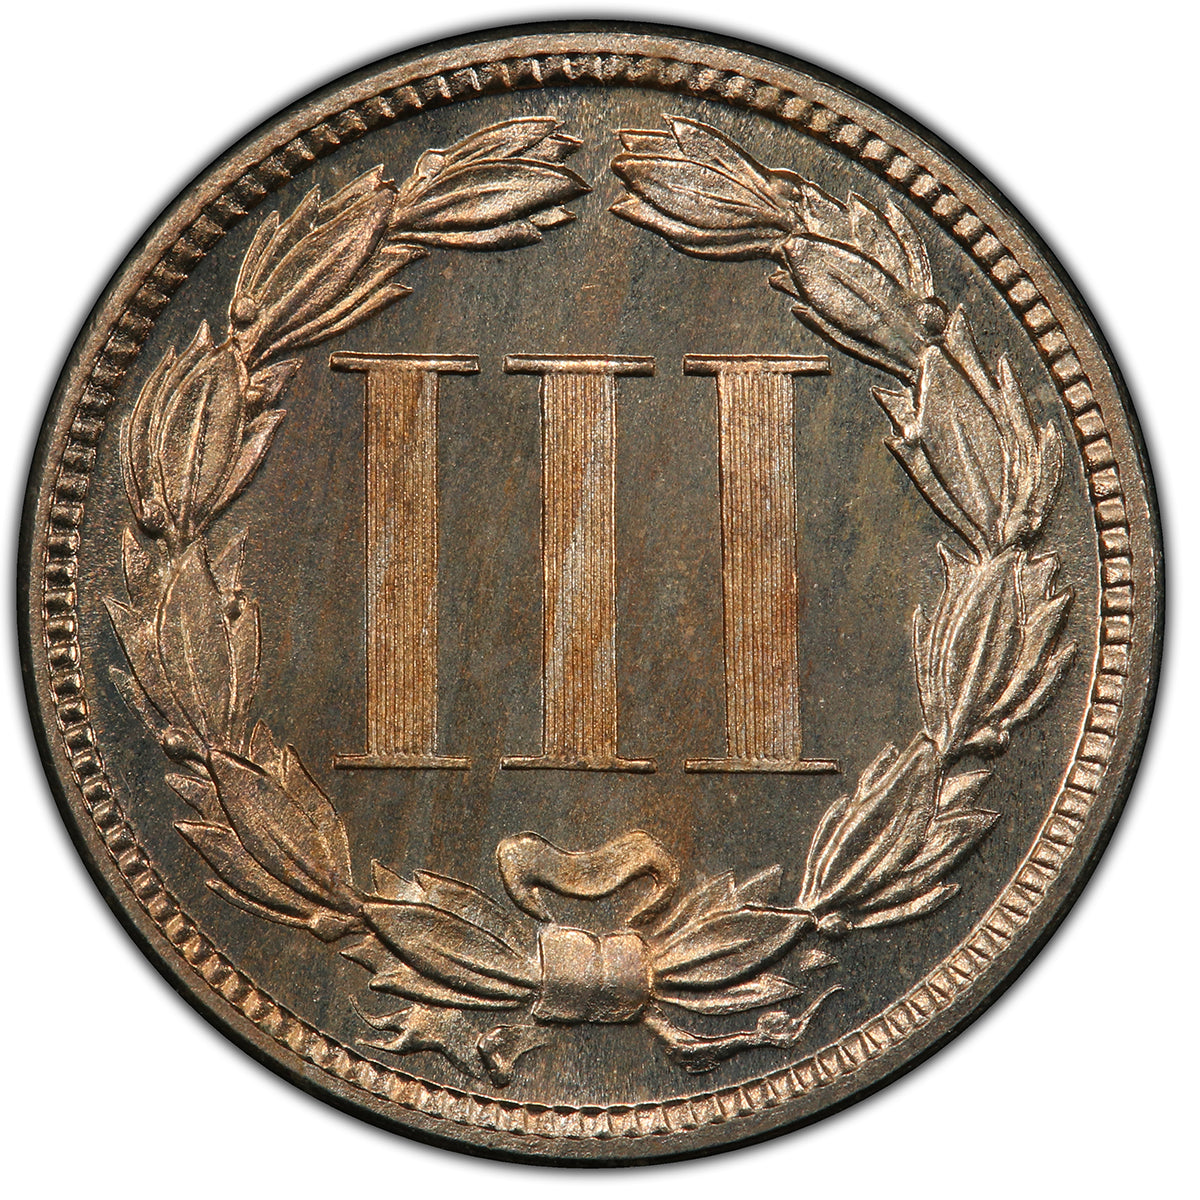 1884 3 Cent Nickel PCGS PR65